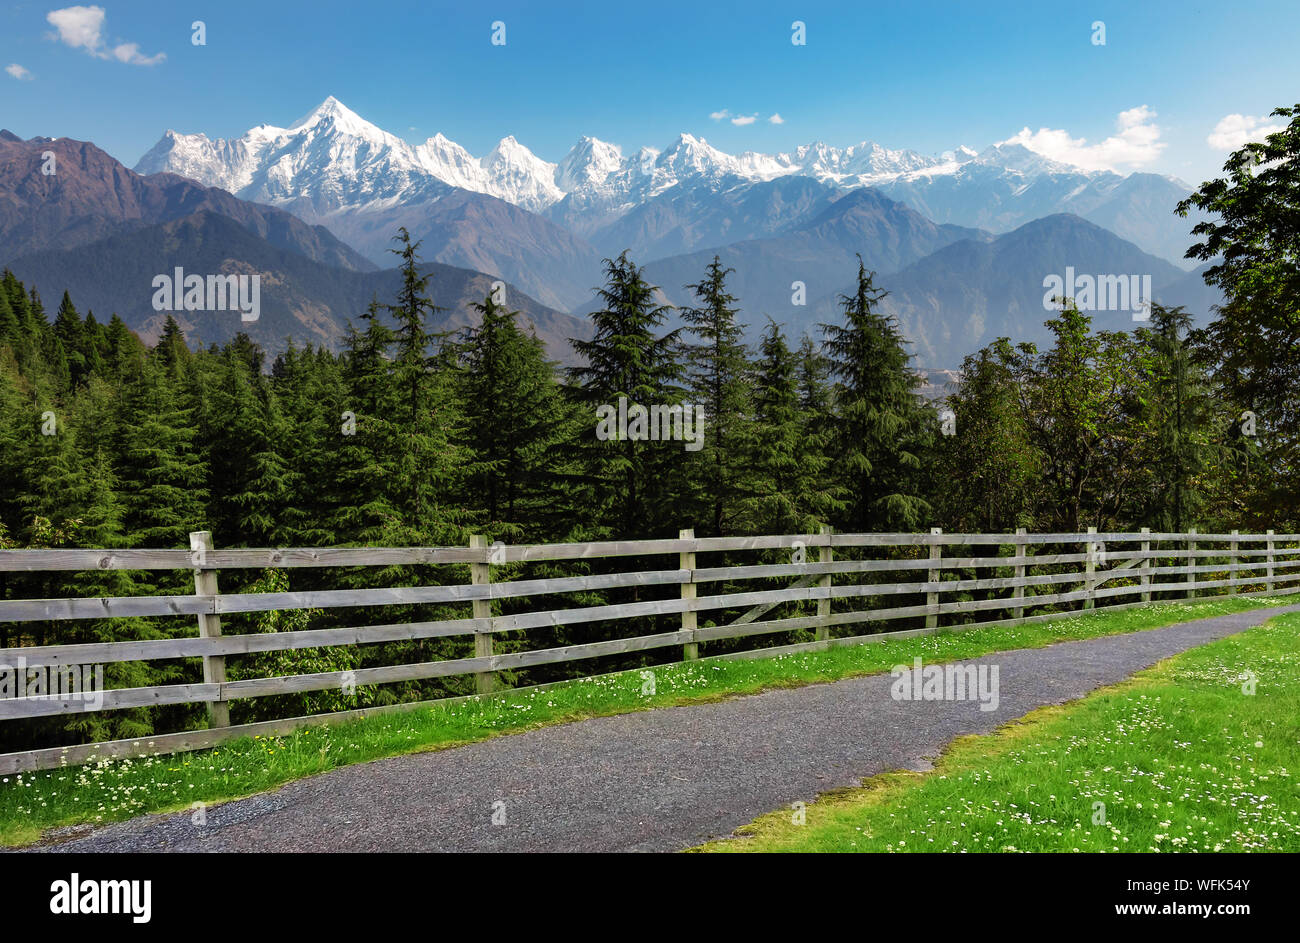 Himalaya mountain range at Munsiyari, Uttarakhand, India with scenic landscape Stock Photo